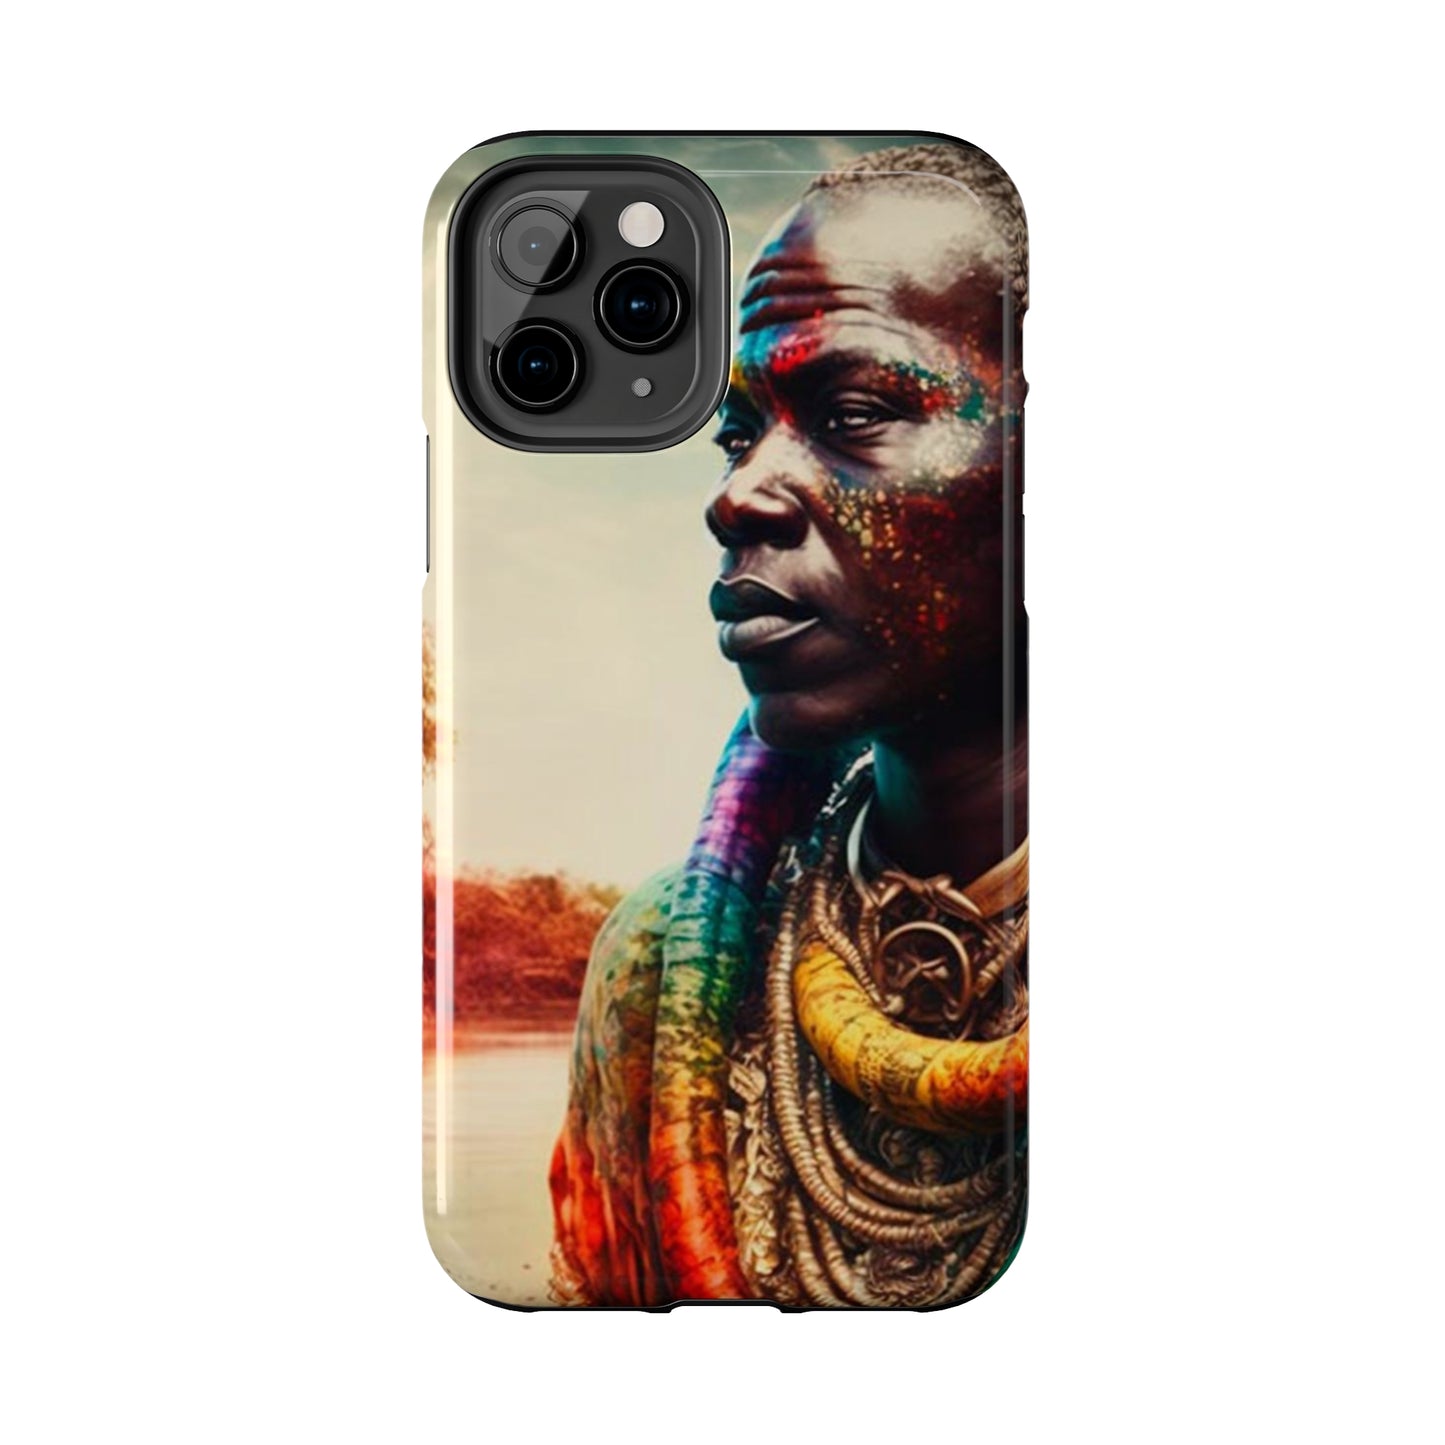 Osumare Tough Iphone Cases